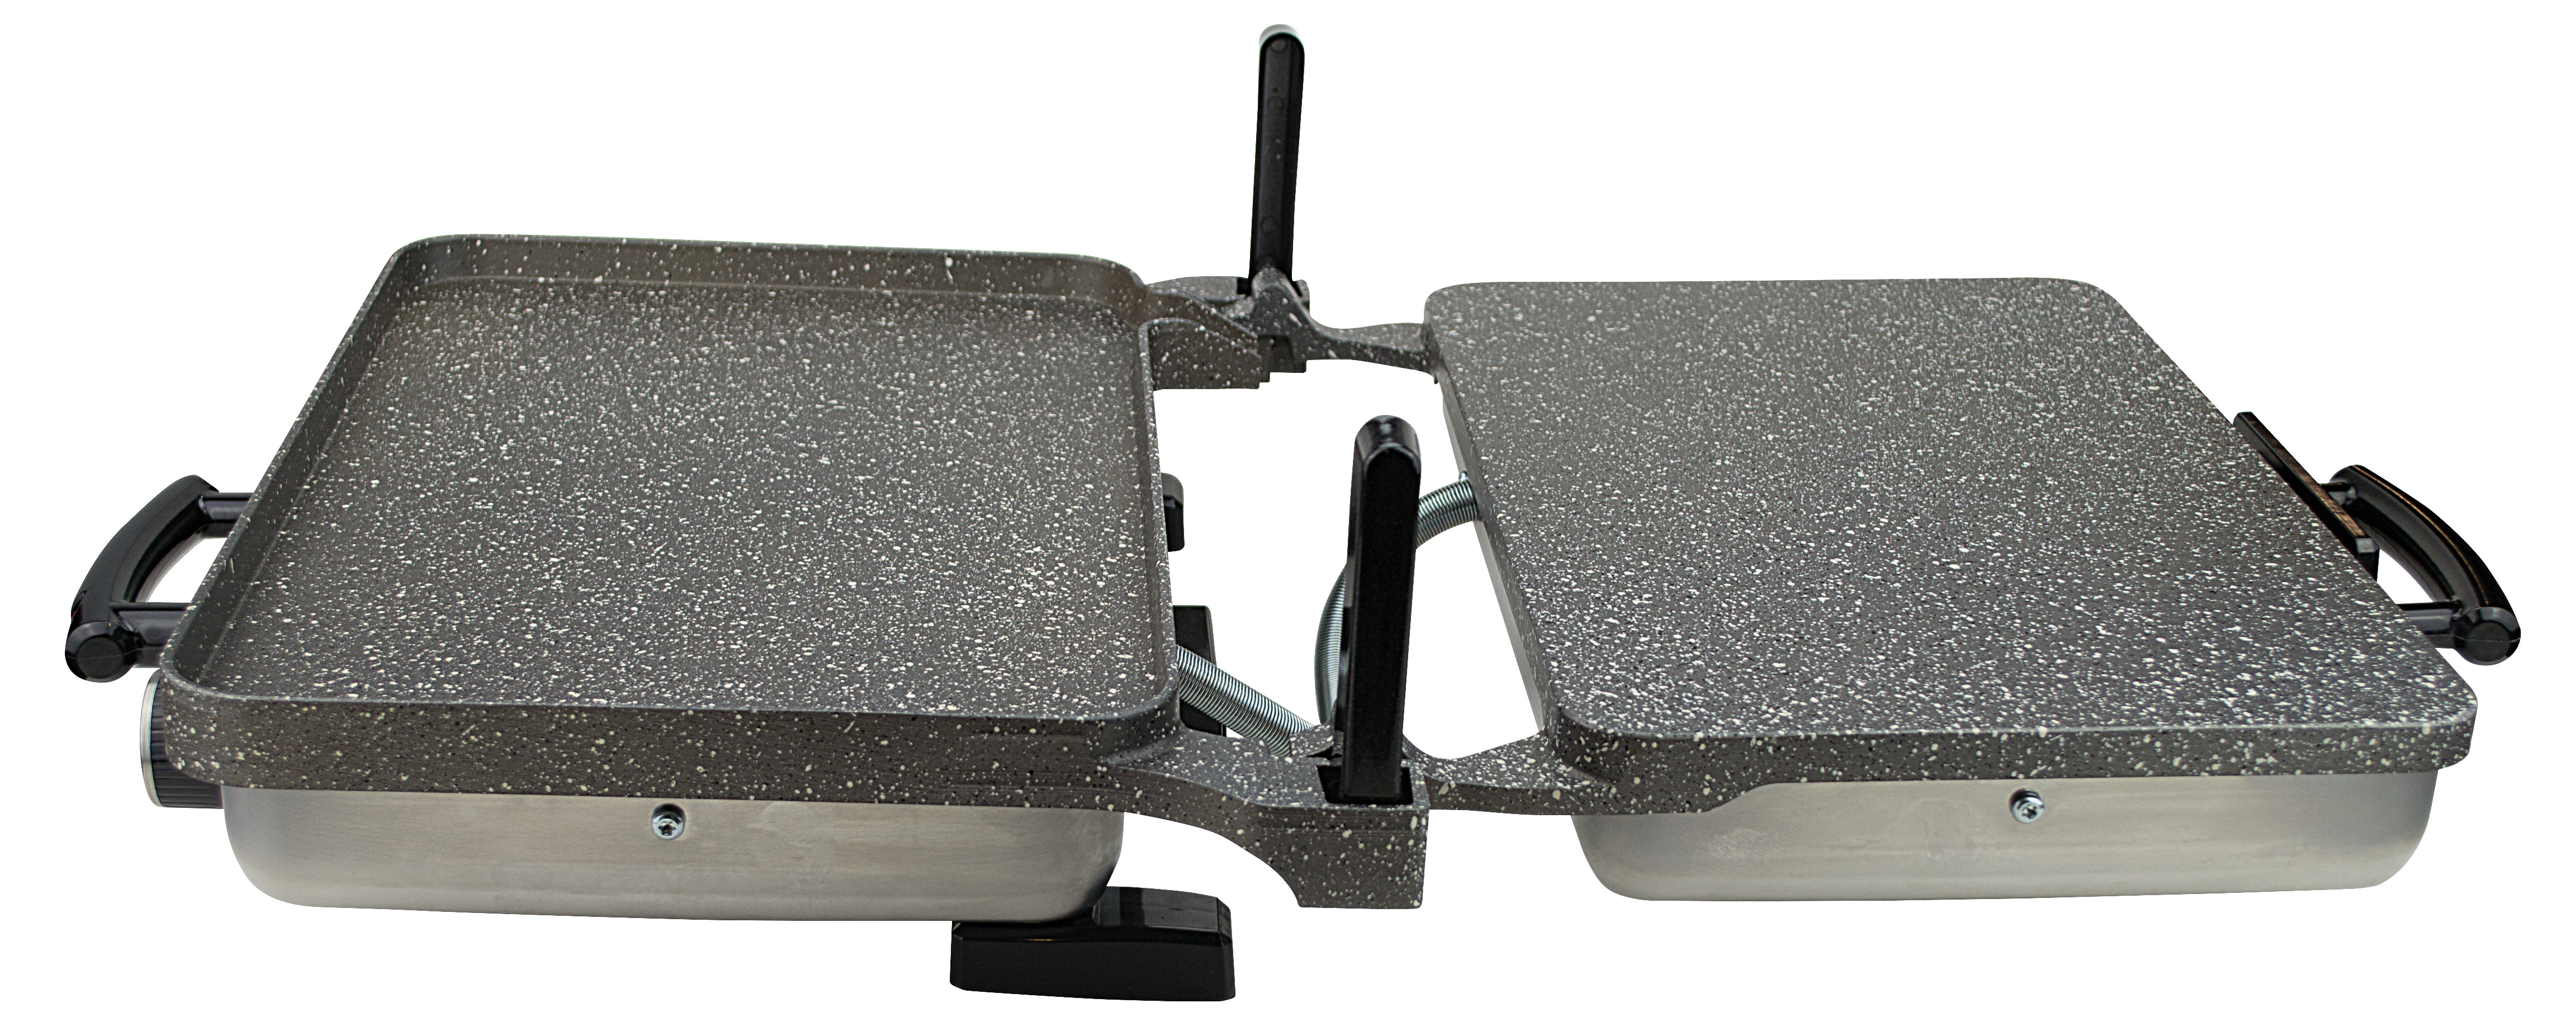 Sermelex JUMBO Granit Grill (INOX) TAVA DAHİL - Silex Bazlama ve Lahmacun Makinesi